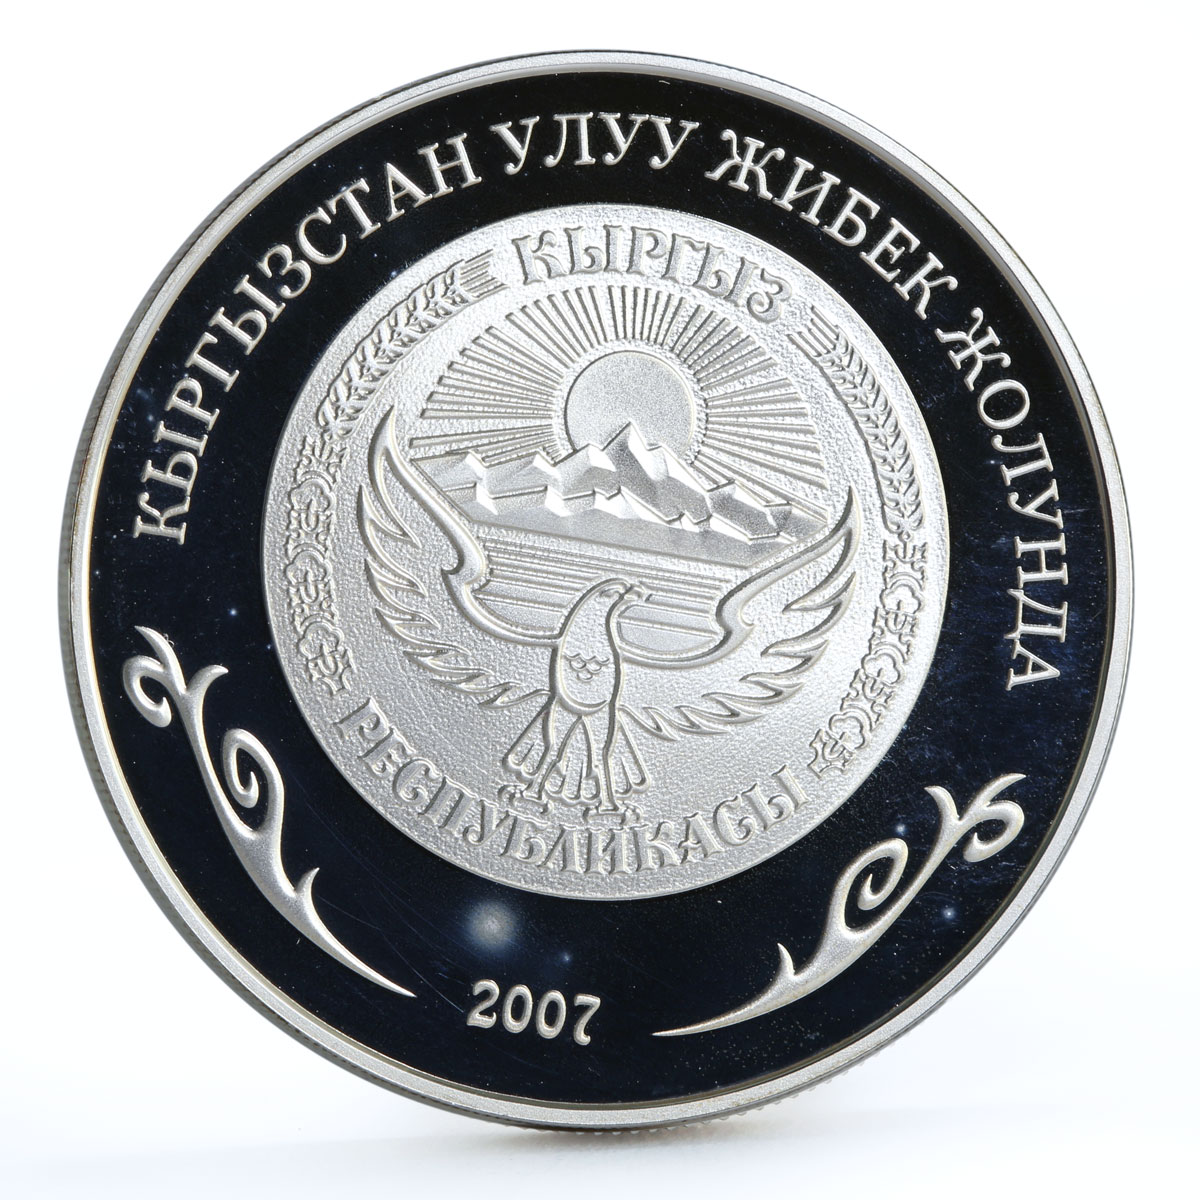 Kyrgyzstan 10 som Uzgen Architectural Complex gilded silver coin 2007